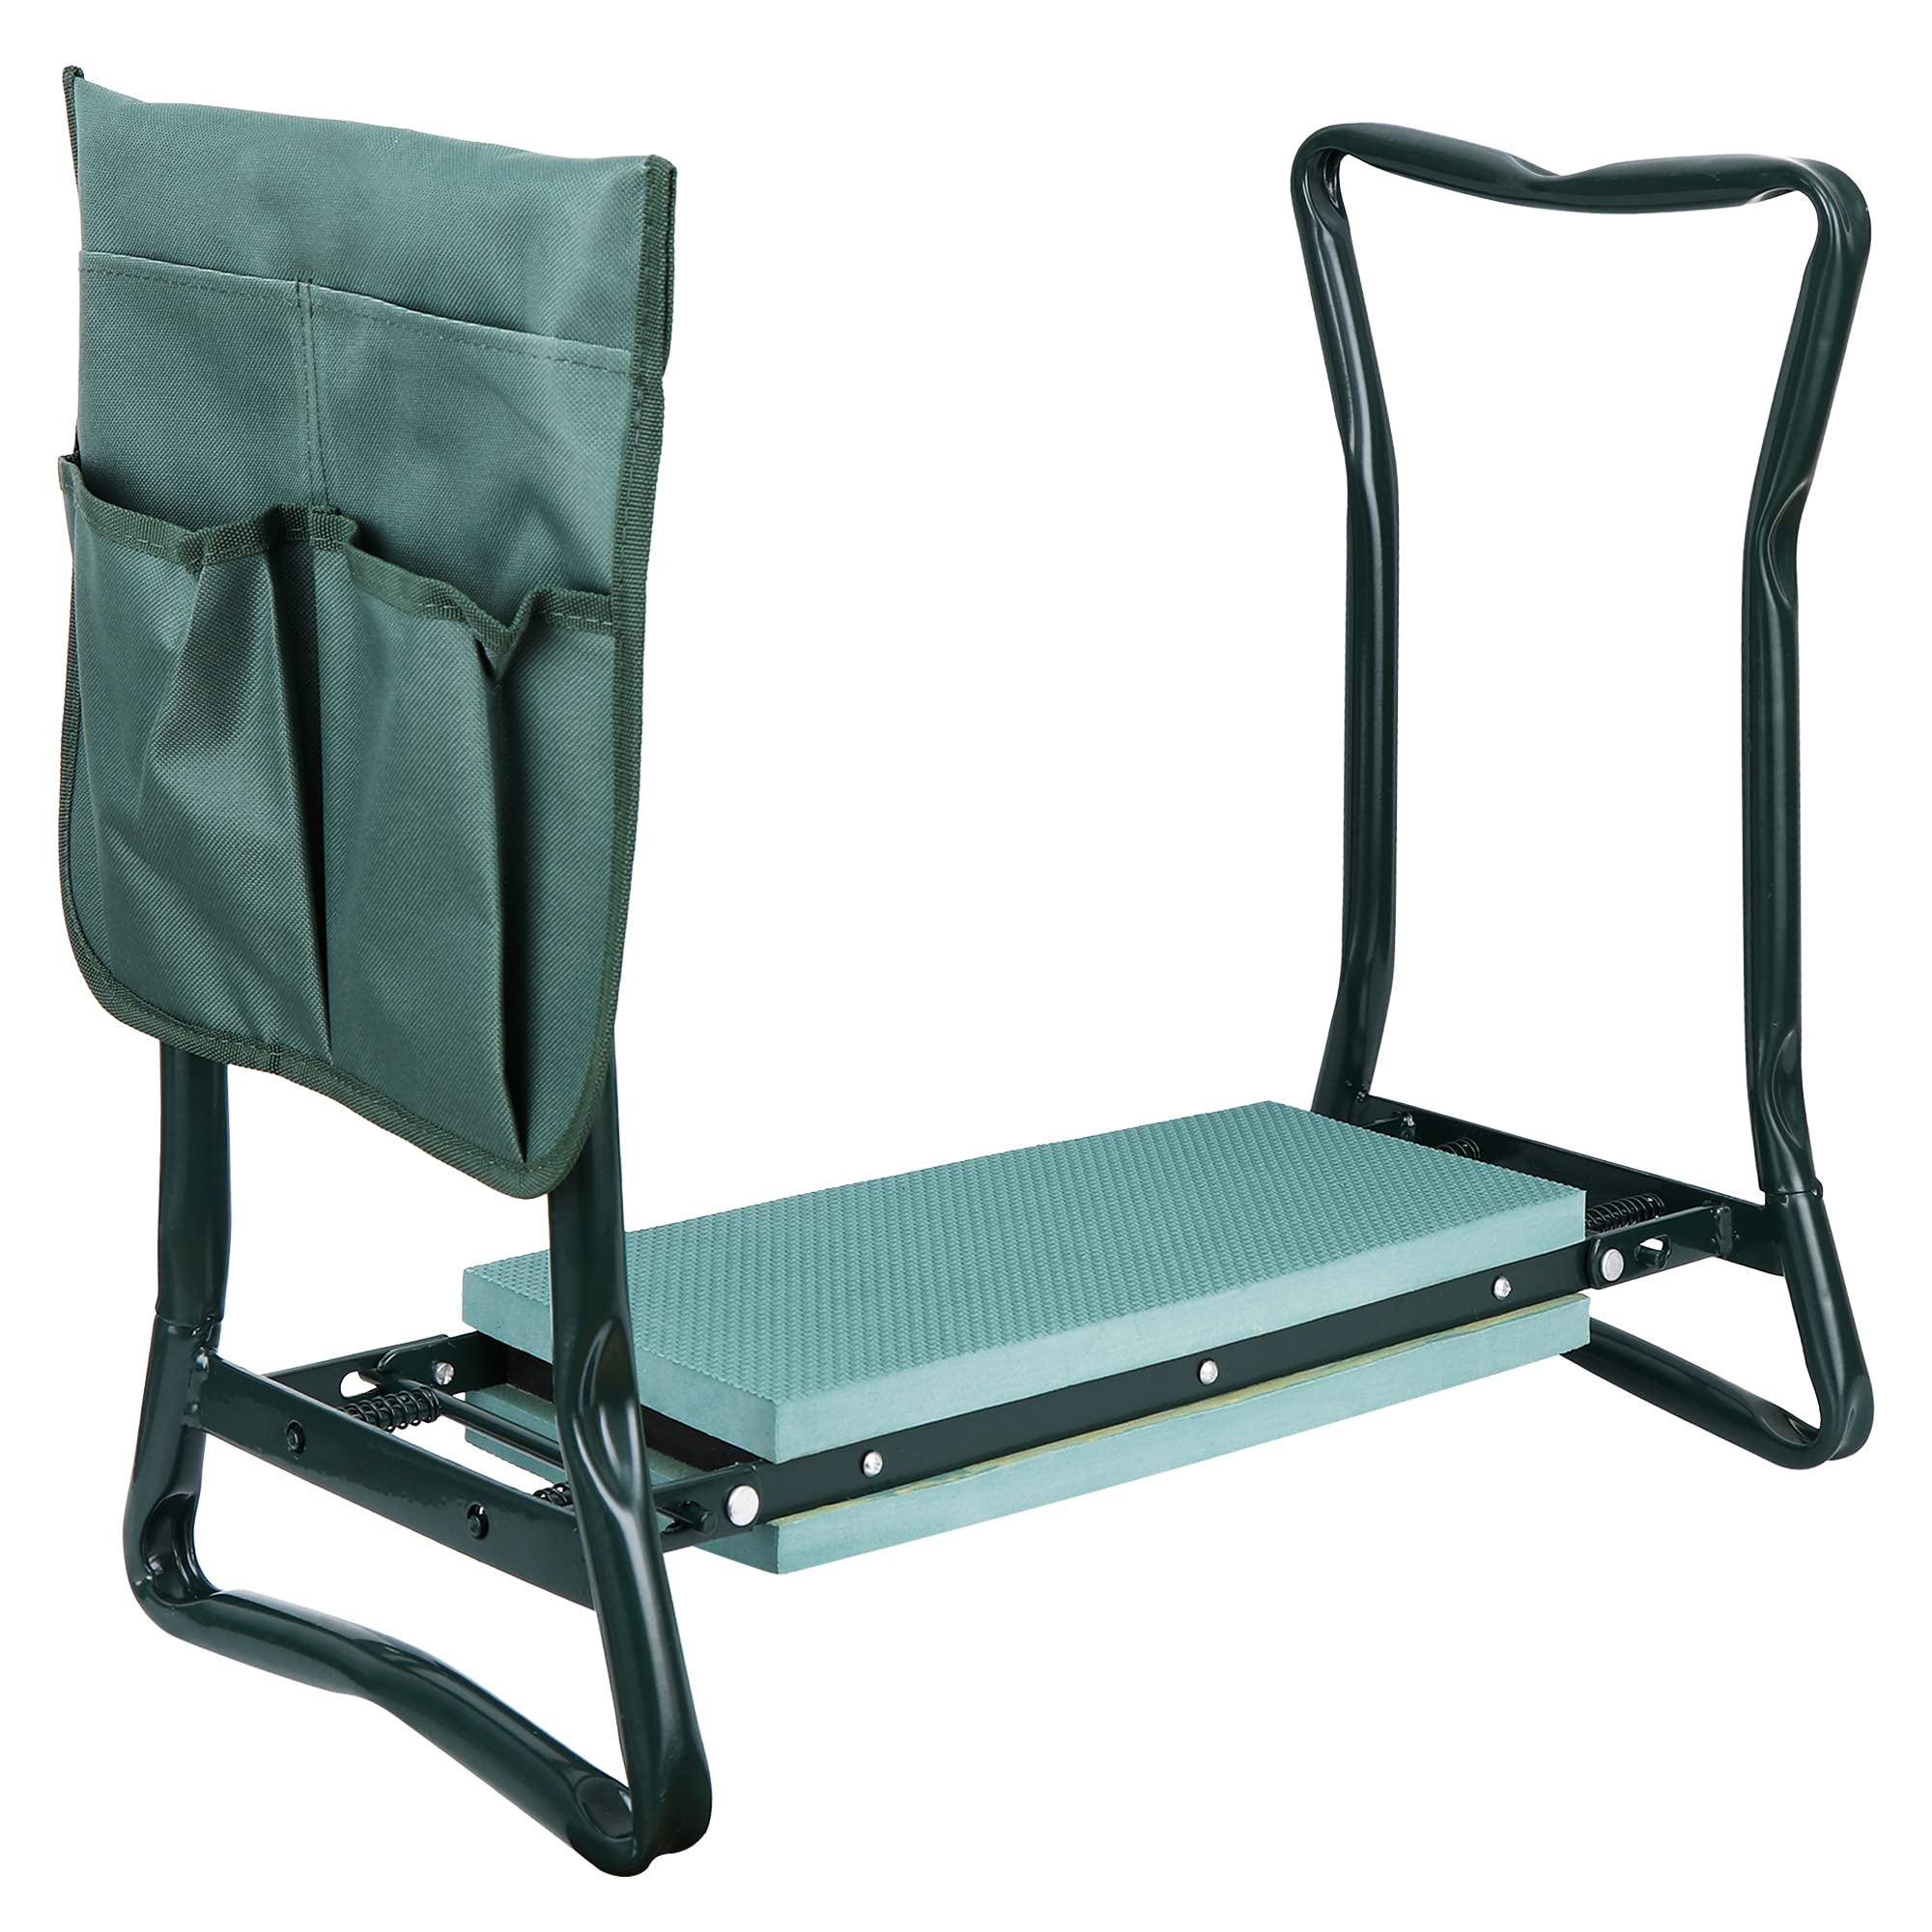 LEMY Garden Kneeler Seat Multiuse Portable Garden Bench Garden Stools Foldable Stool with Tool Bag Pouch EVA Foam Pad